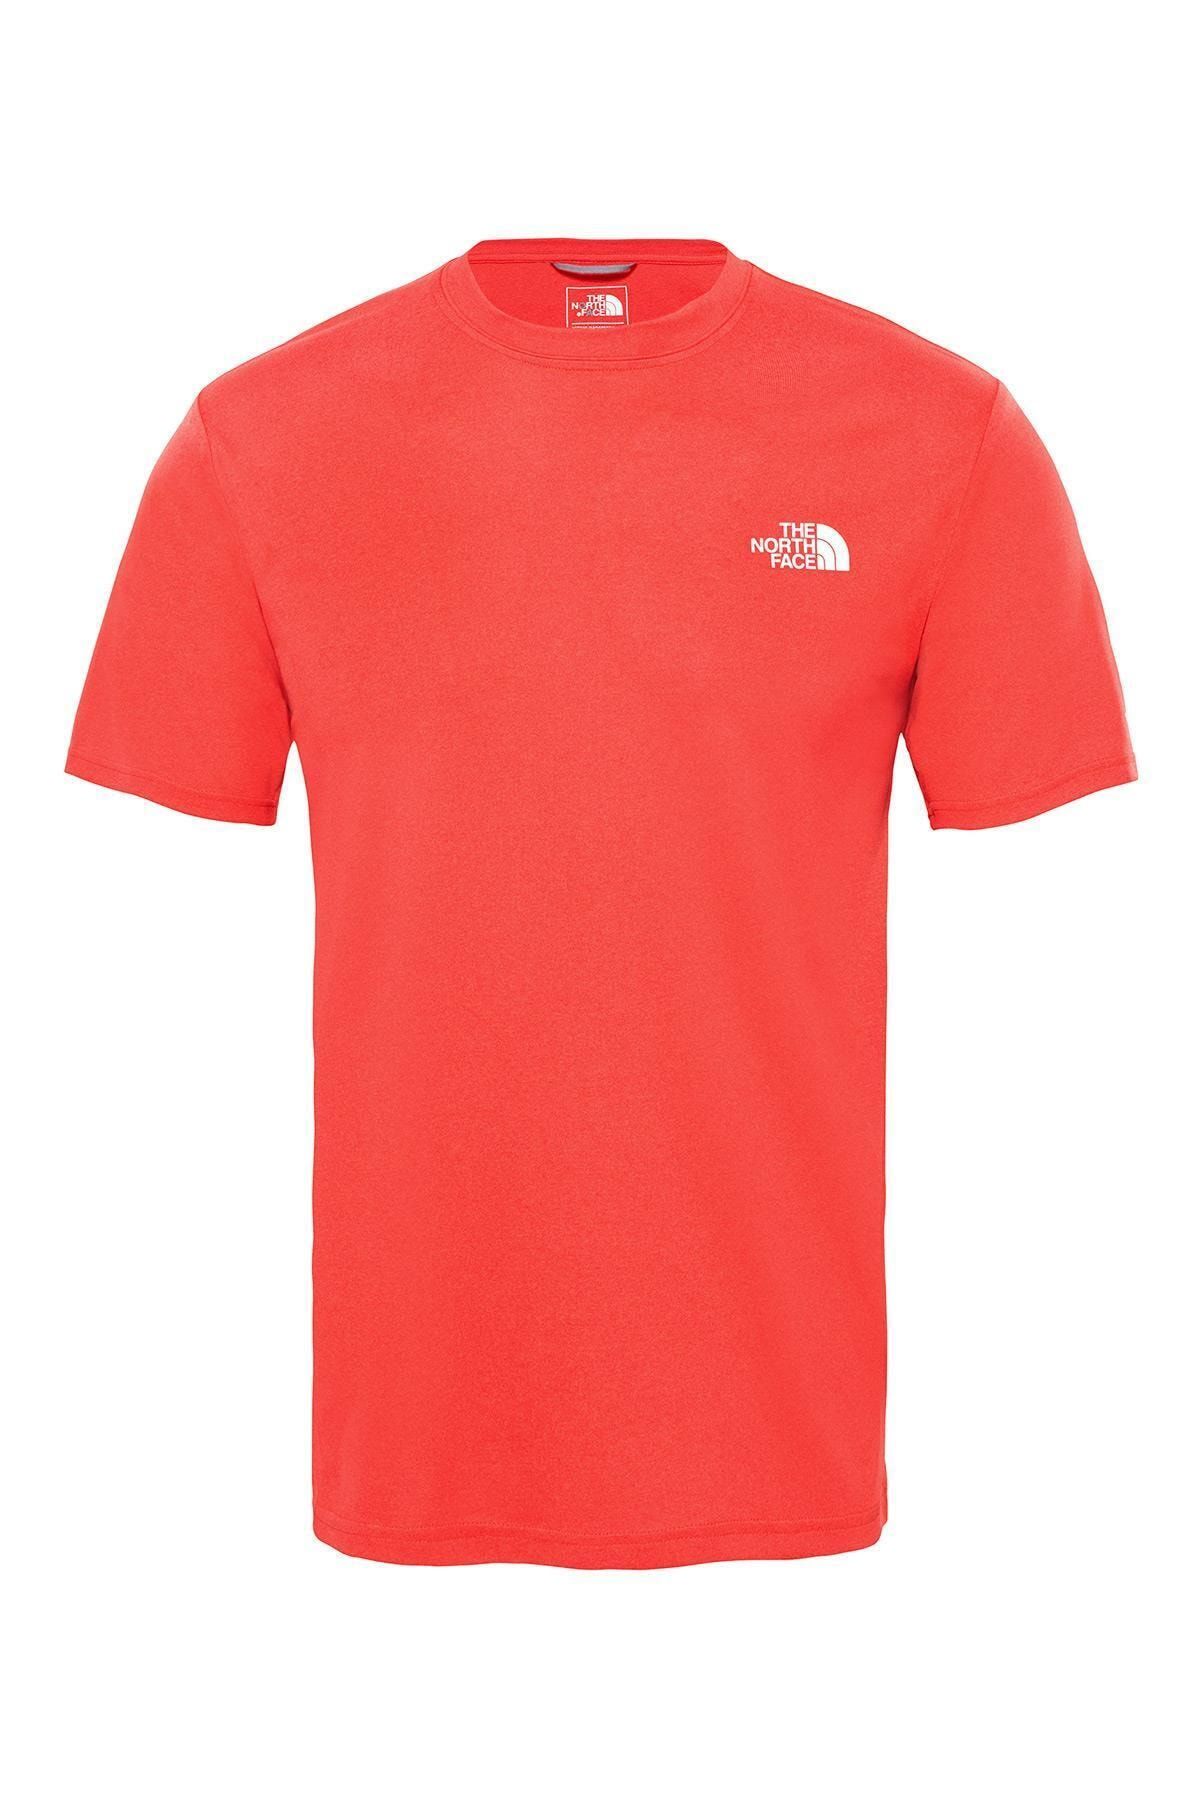 The North Face M REAXION AMP CREW - EU Kırmızı Erkek T-Shirt 100480907